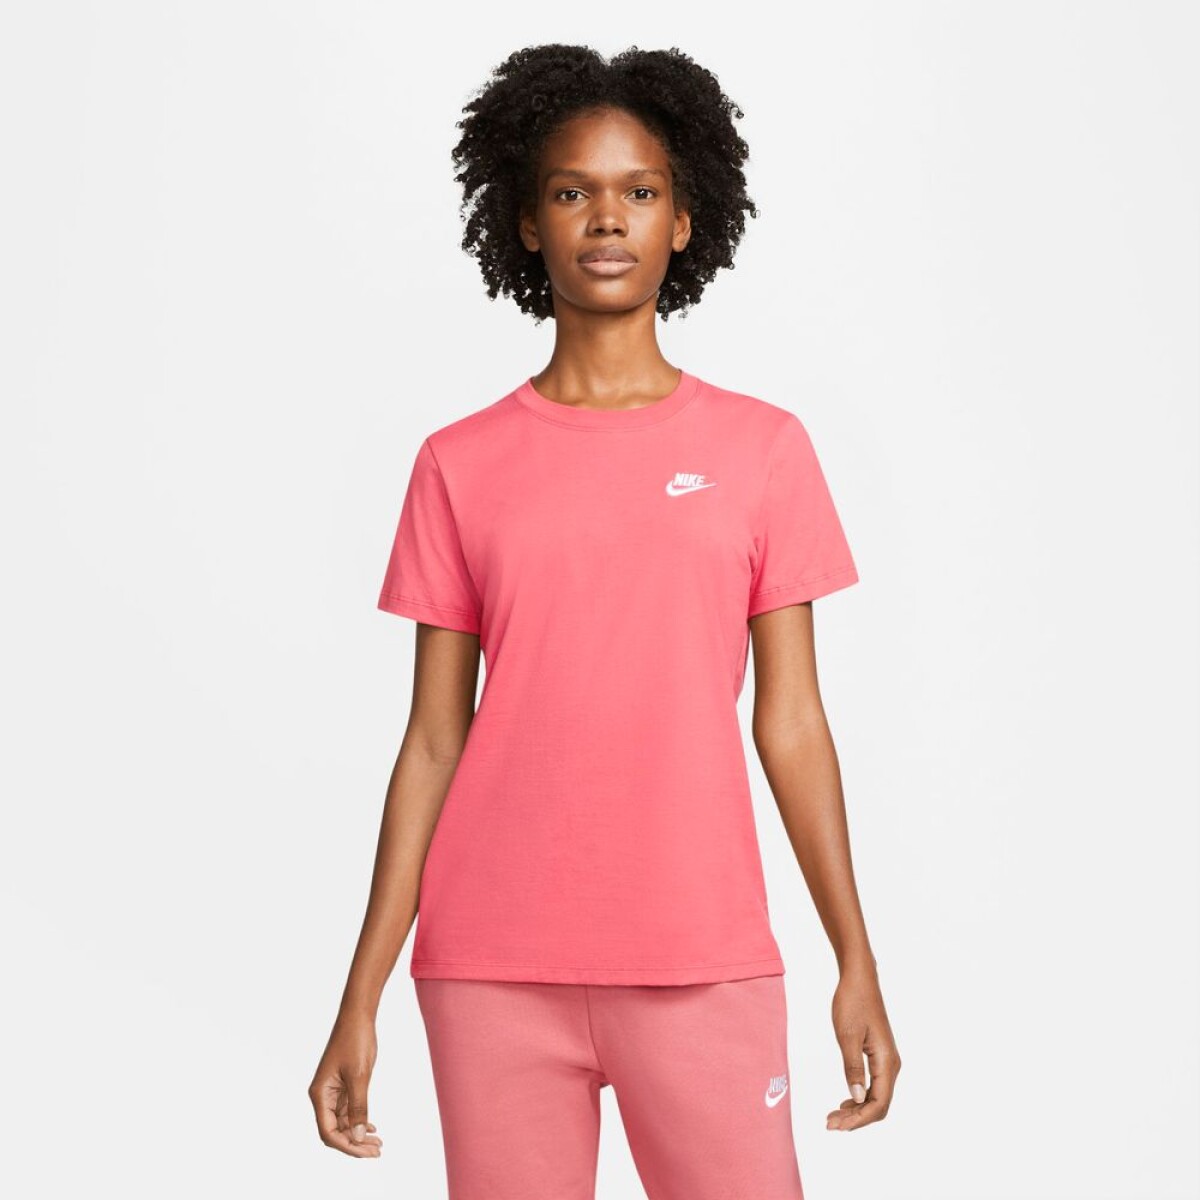 Remera Nike Moda Dama Club Tee - Color Único 